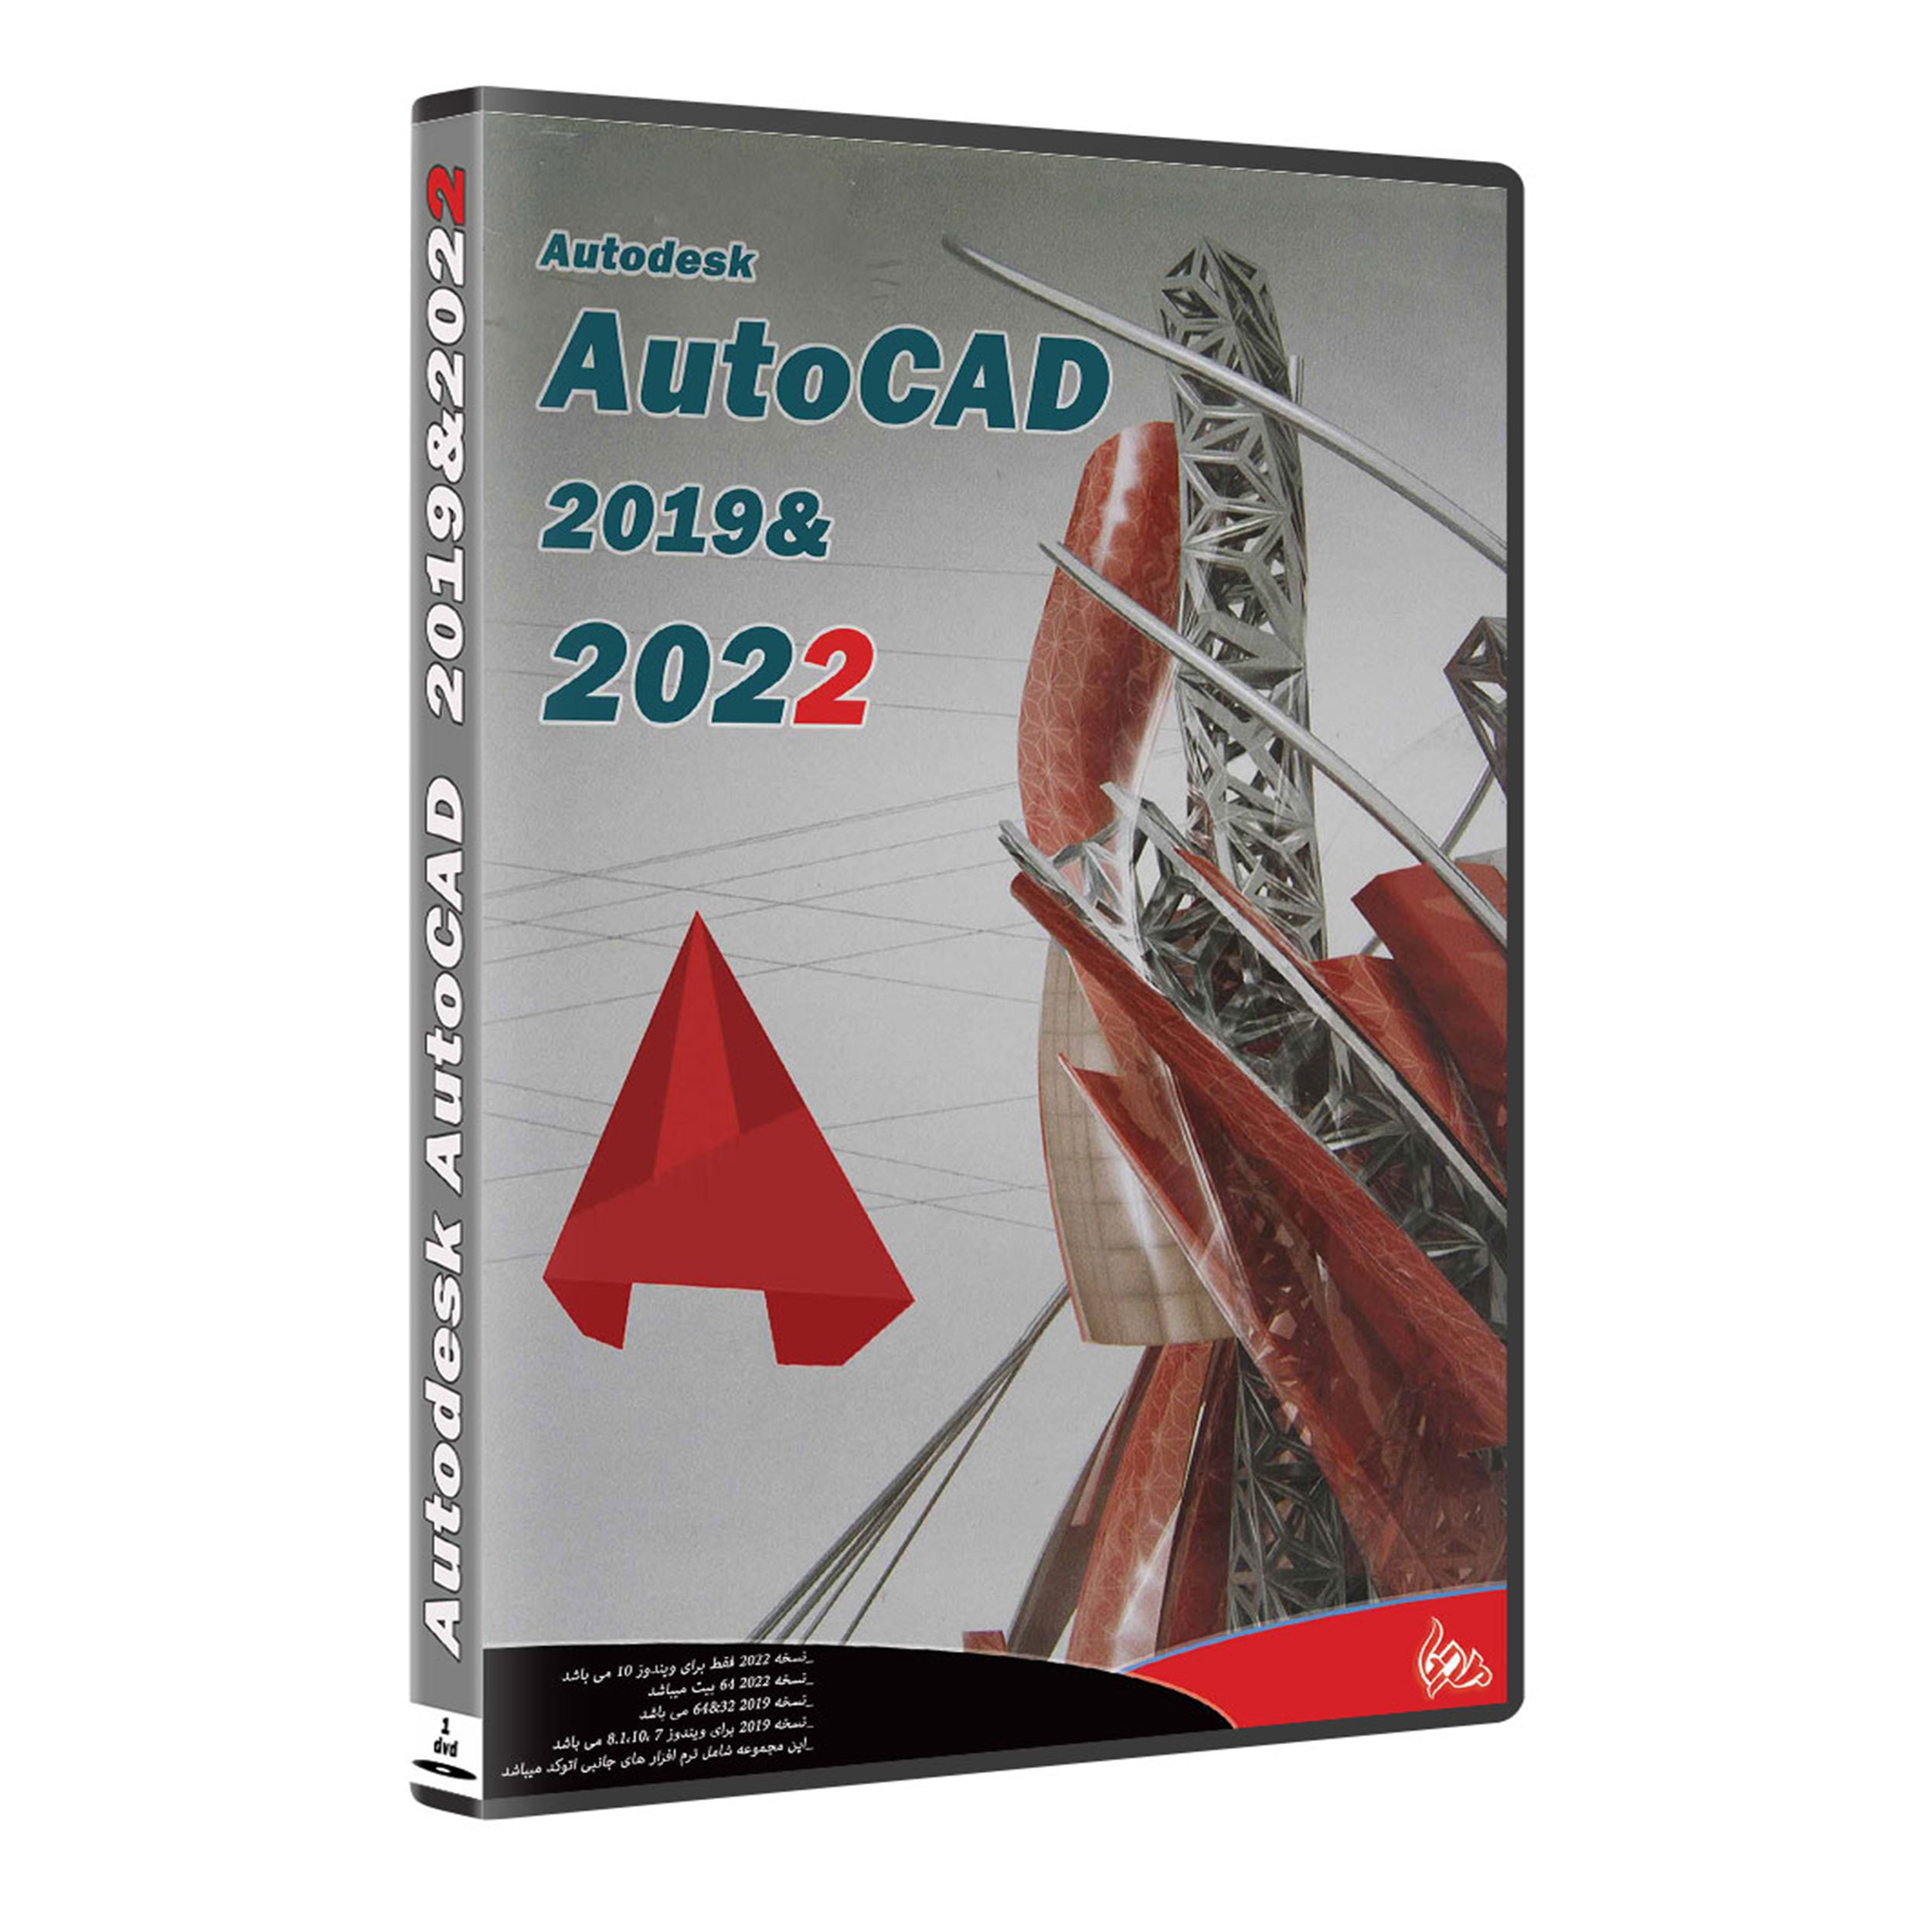 نرم افزار AUTODESK AUTOCAD 2019 & 2022 نشر پدیا